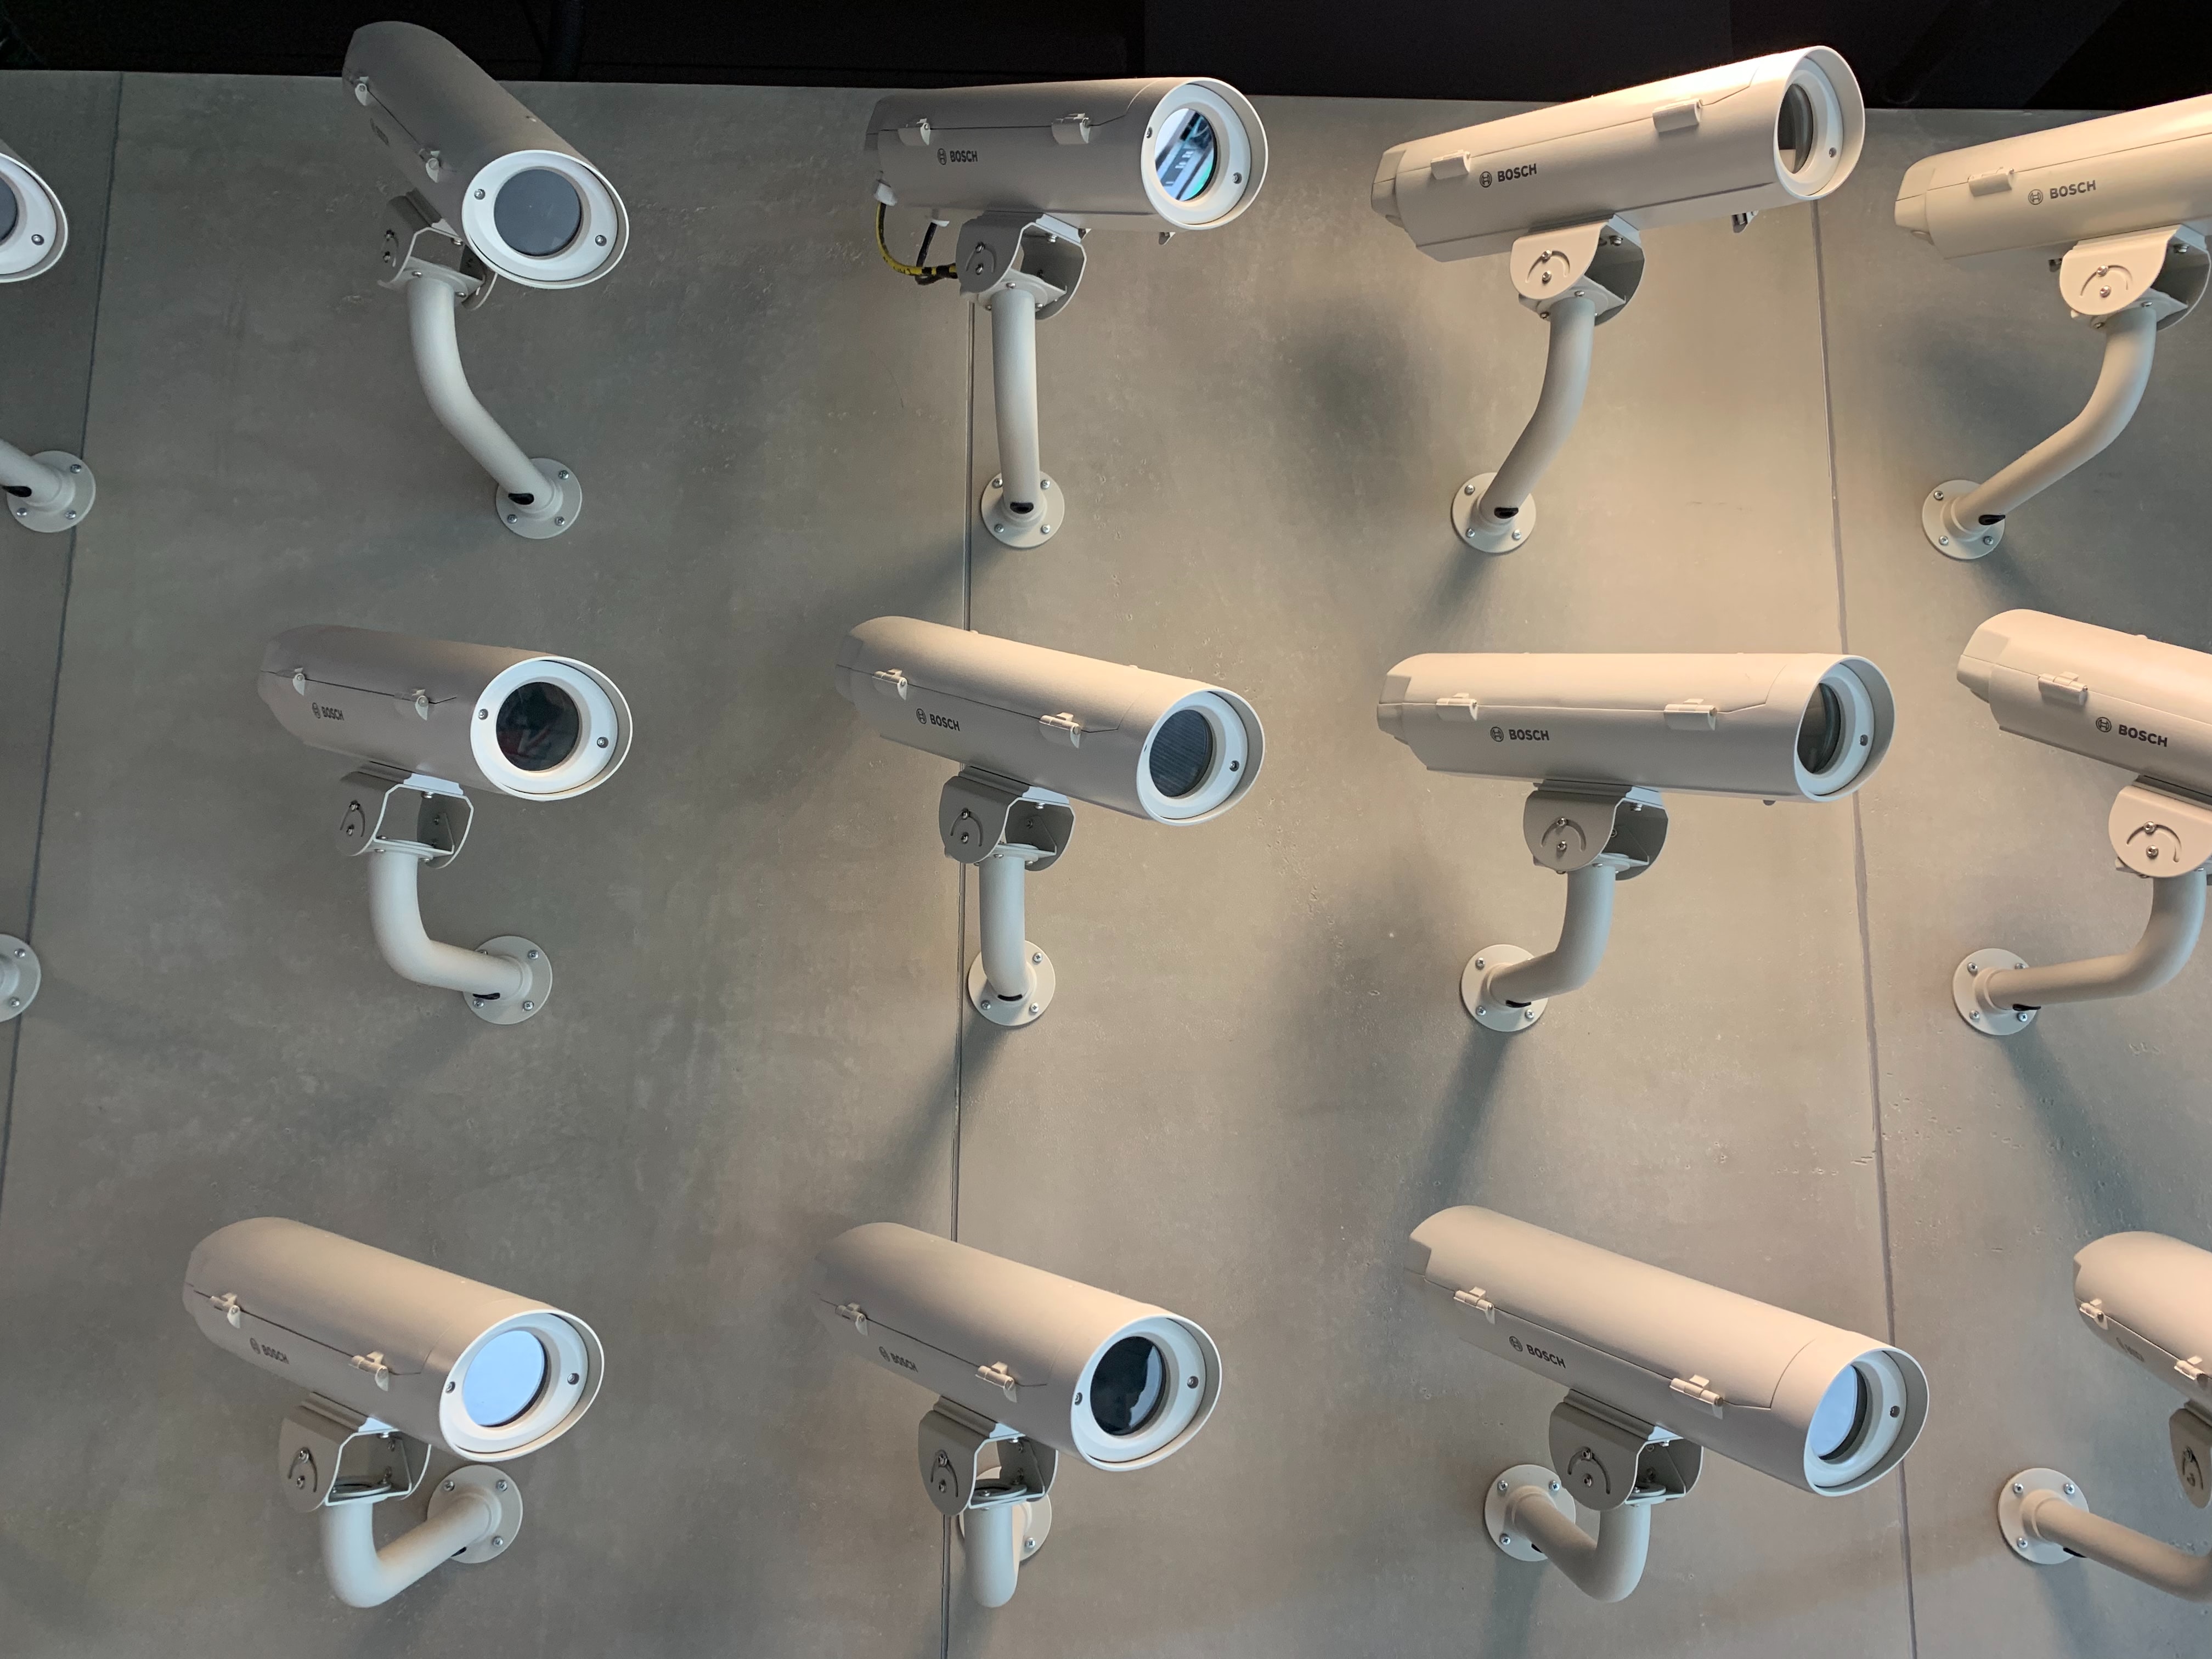 nick loggie fRVPzBYcd5A unsplash Business CCTV Security - Definitive Guide